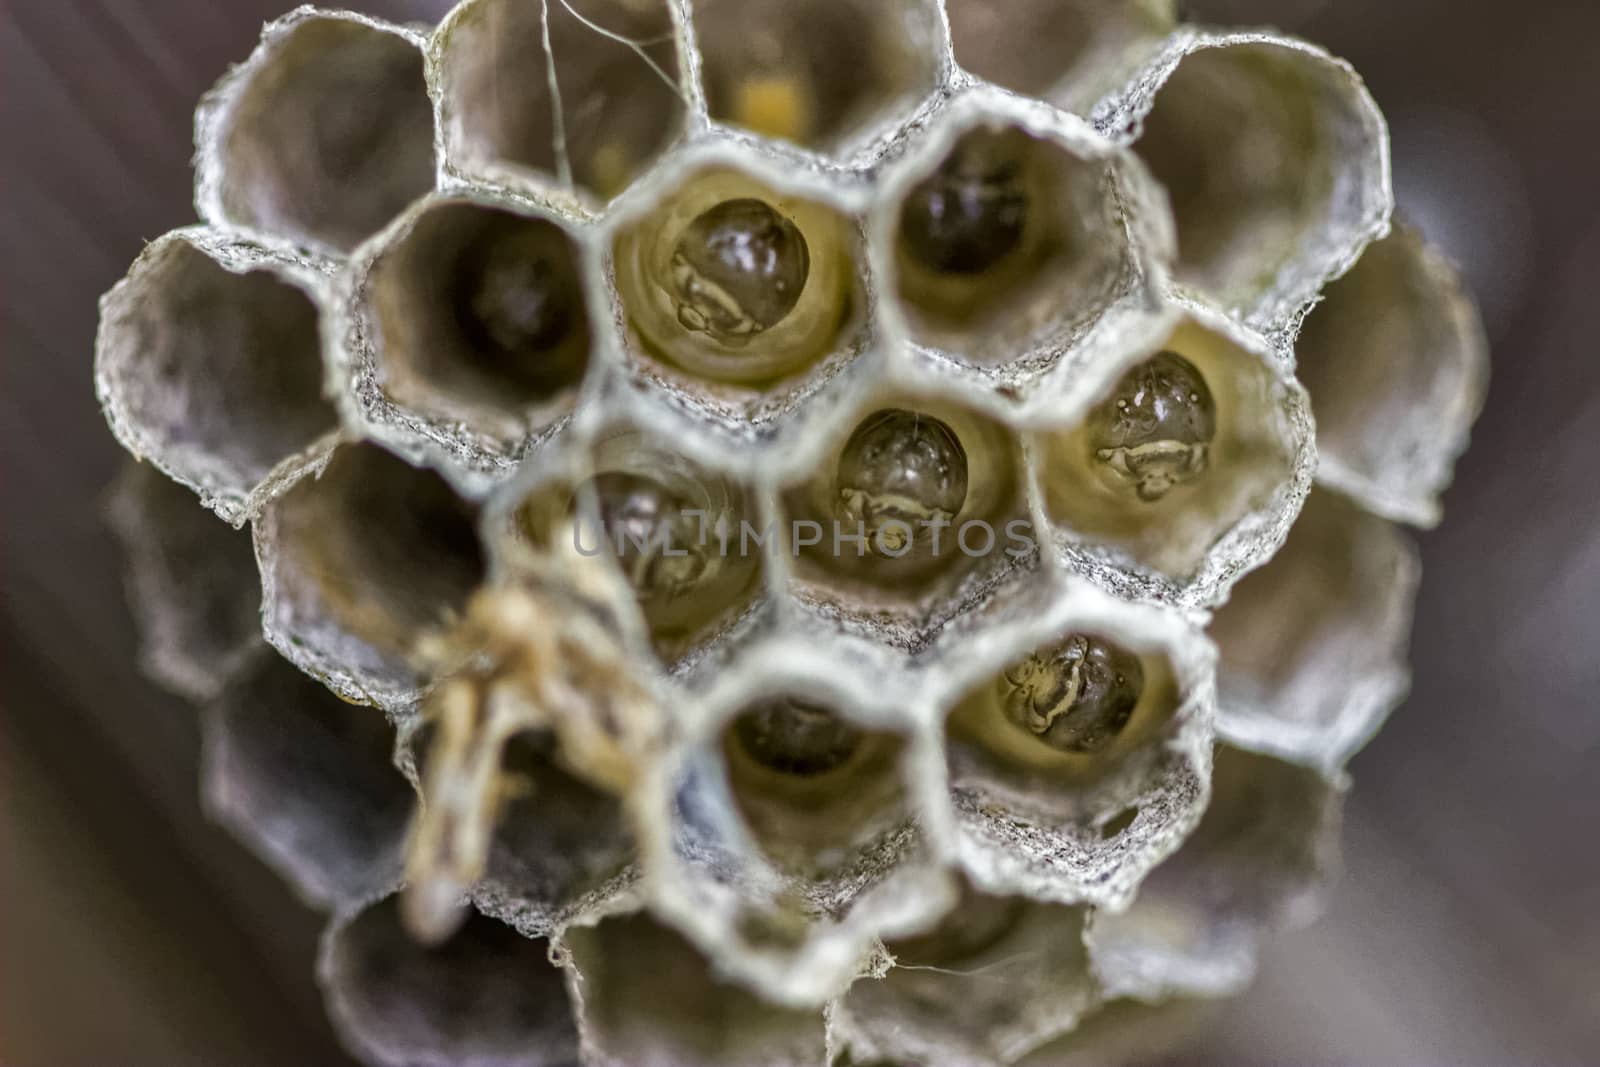 Wasp Nursery by bkenney5@gmail.com